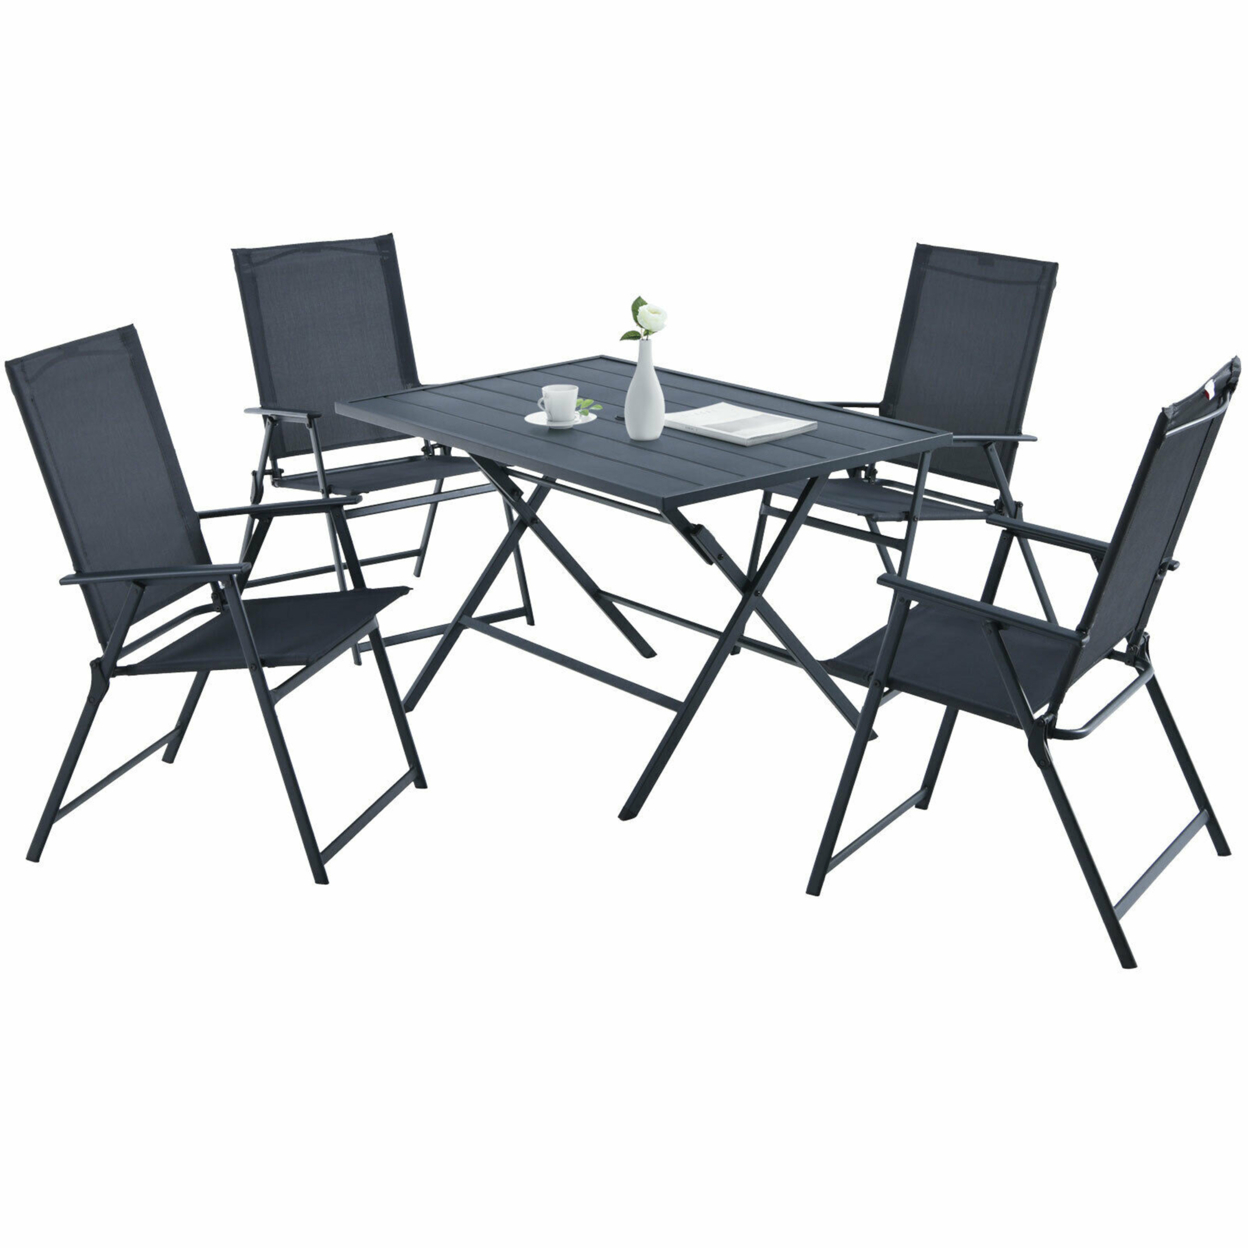 5PCS Patio Folding Table & Chairs Set Outdoor Dining Set W/ Umbrella Hole